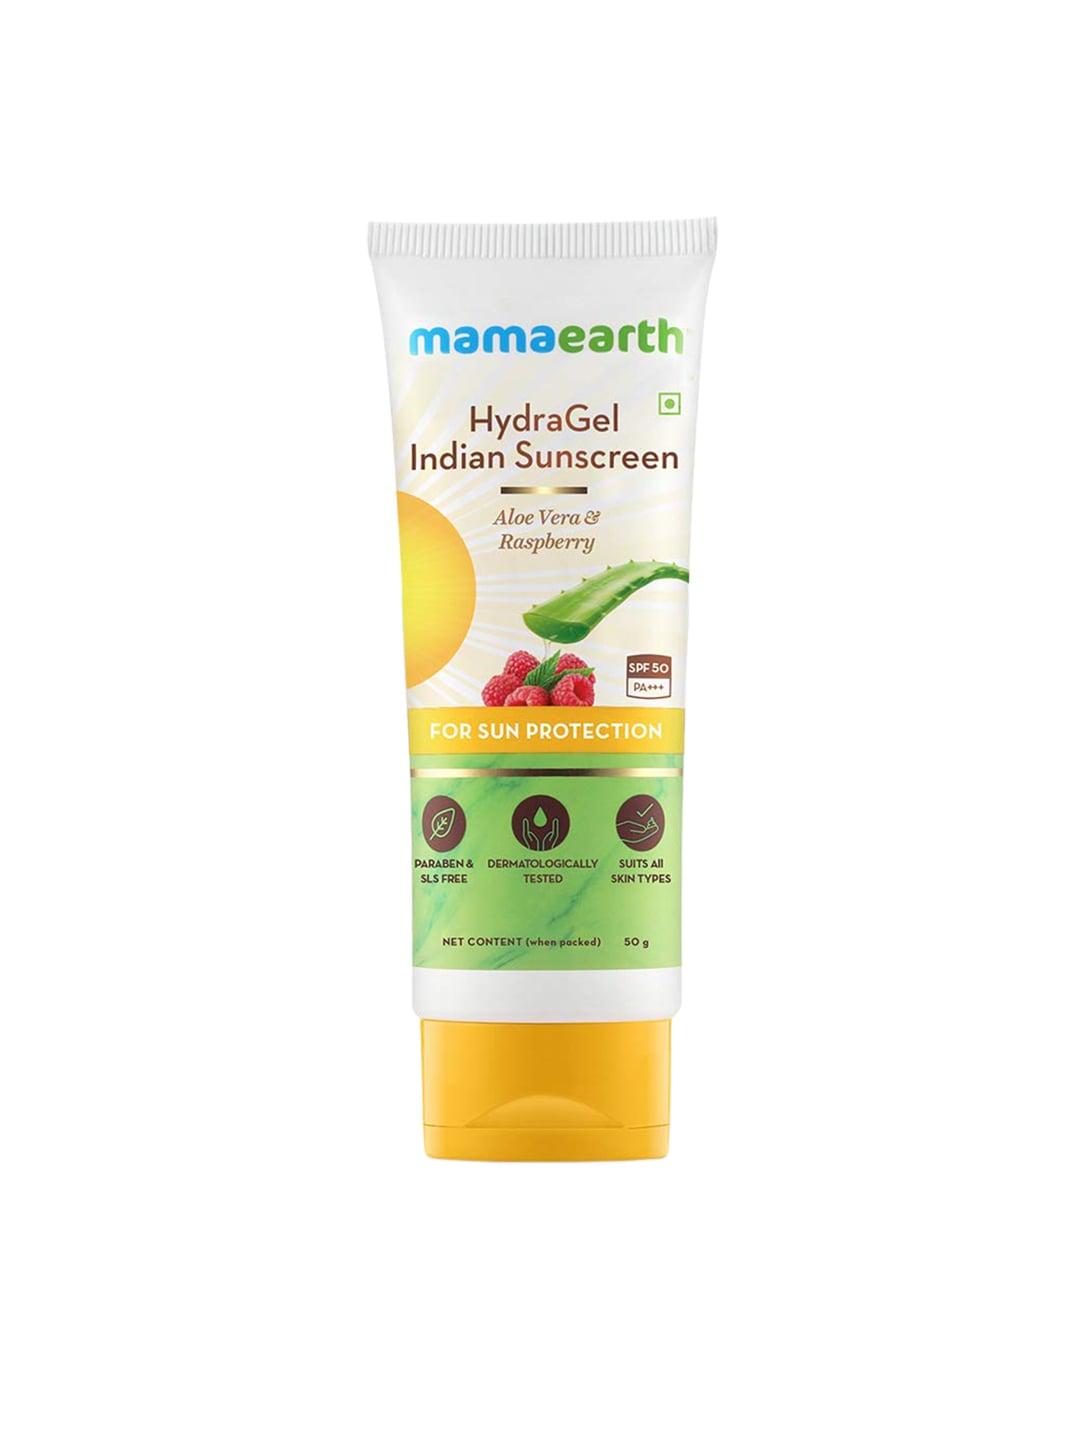 mamaearth hydragel indian sunscreen spf 50 with aloe vera & raspberry - 50 g